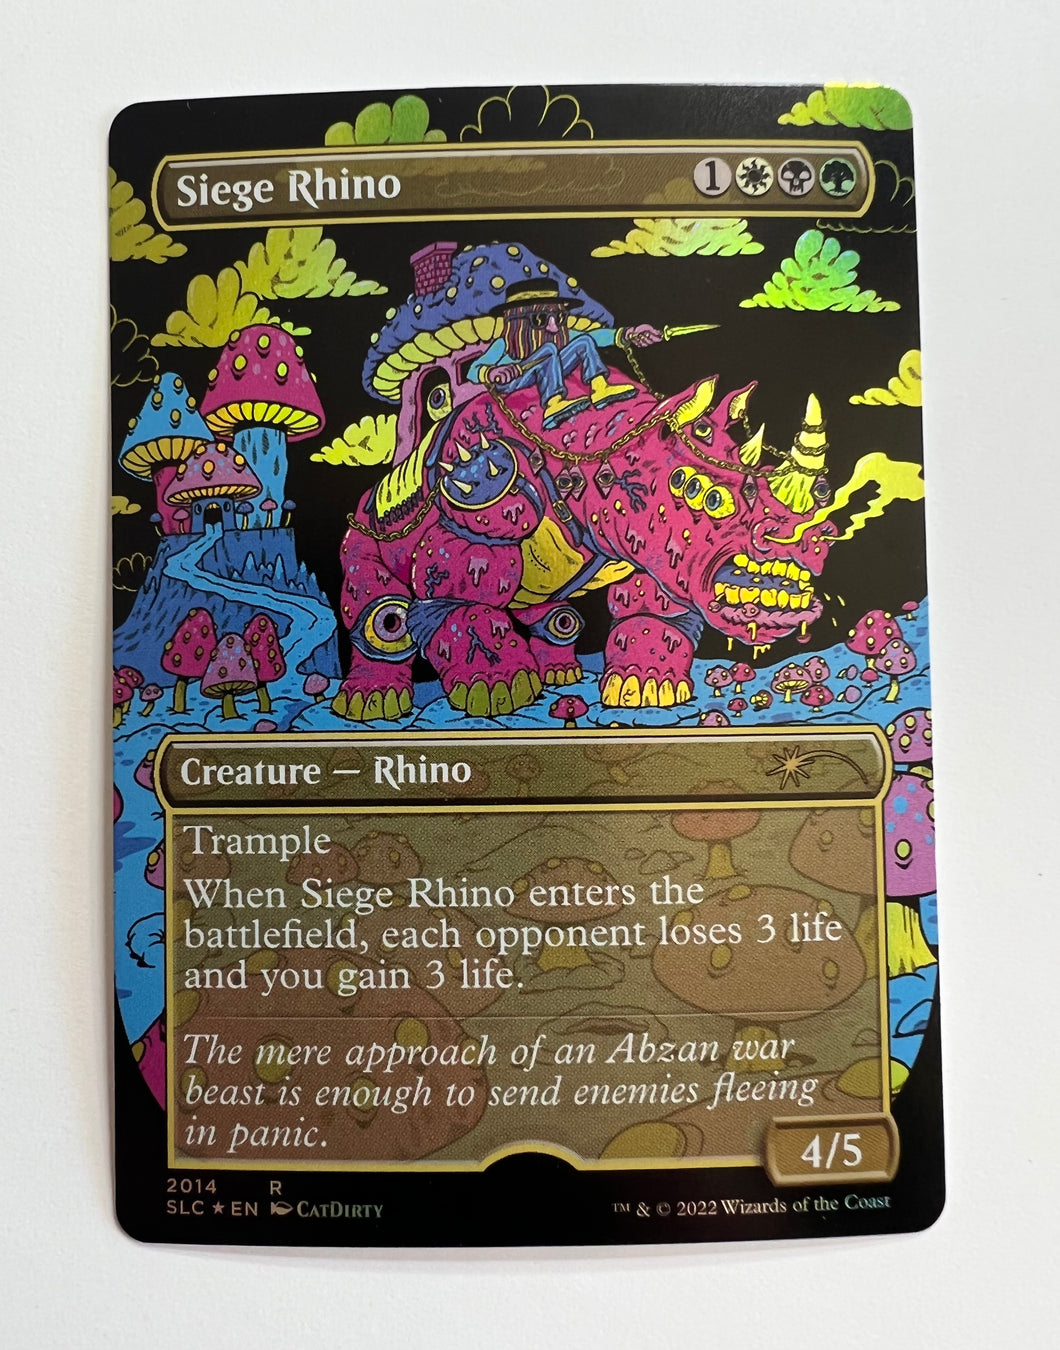 Siege Rhino-Magic The Gathering Artist proofs